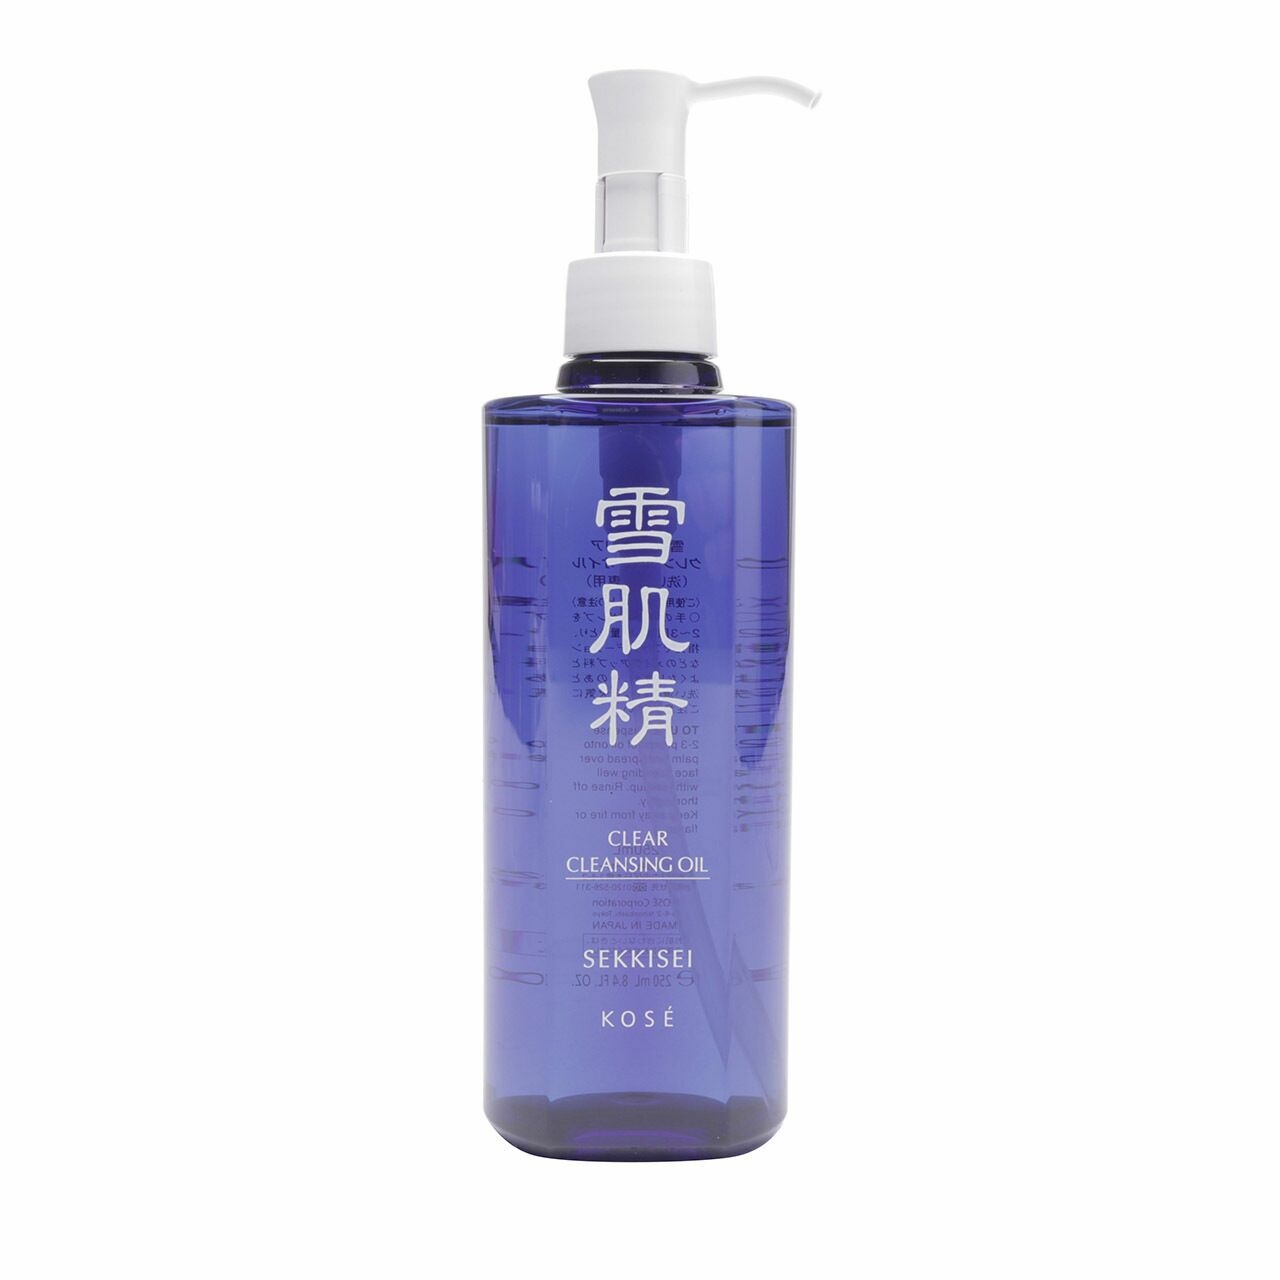 Kose Sekkisei Clear Cleansing Oil Skin Care